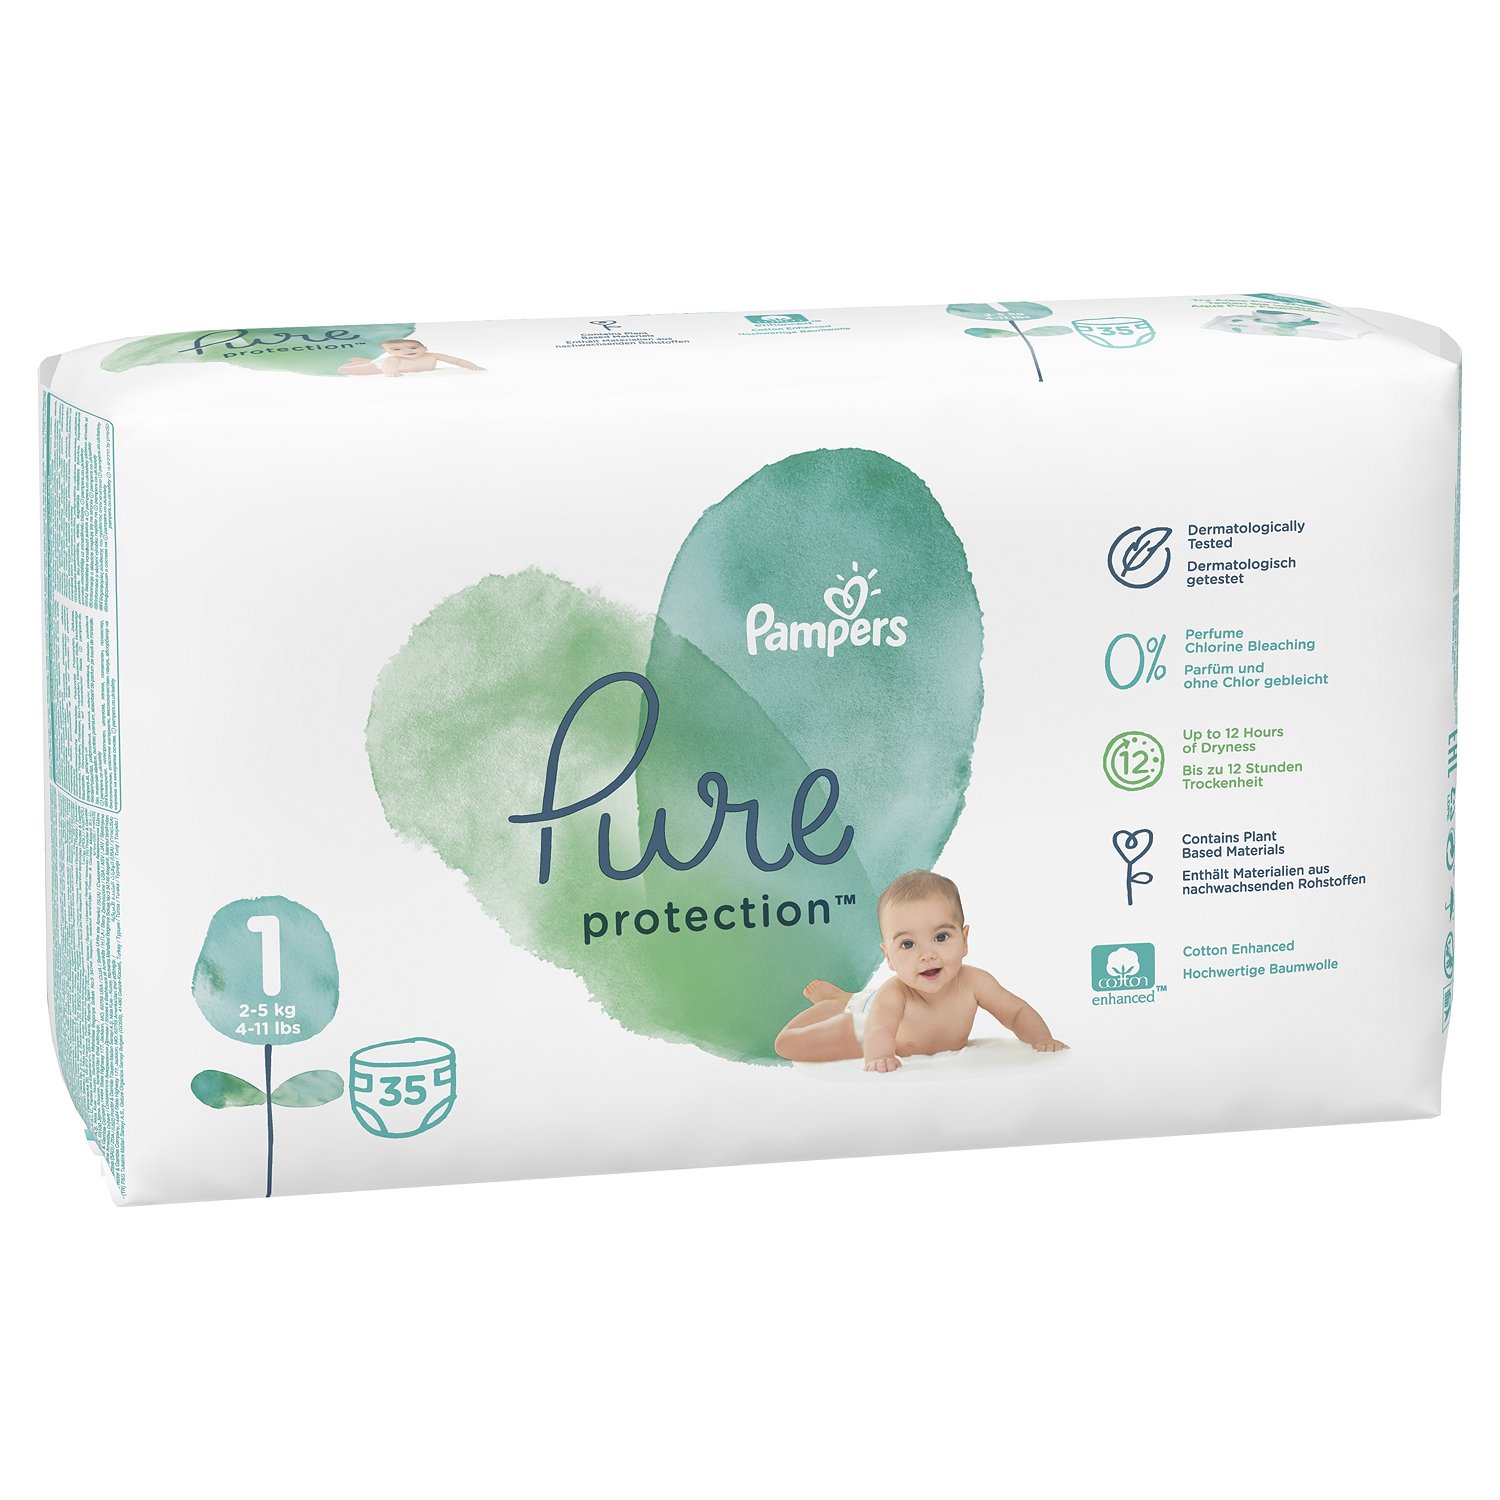 Подгузники Pampers Pure Protection Newborn 2-5кг 35шт